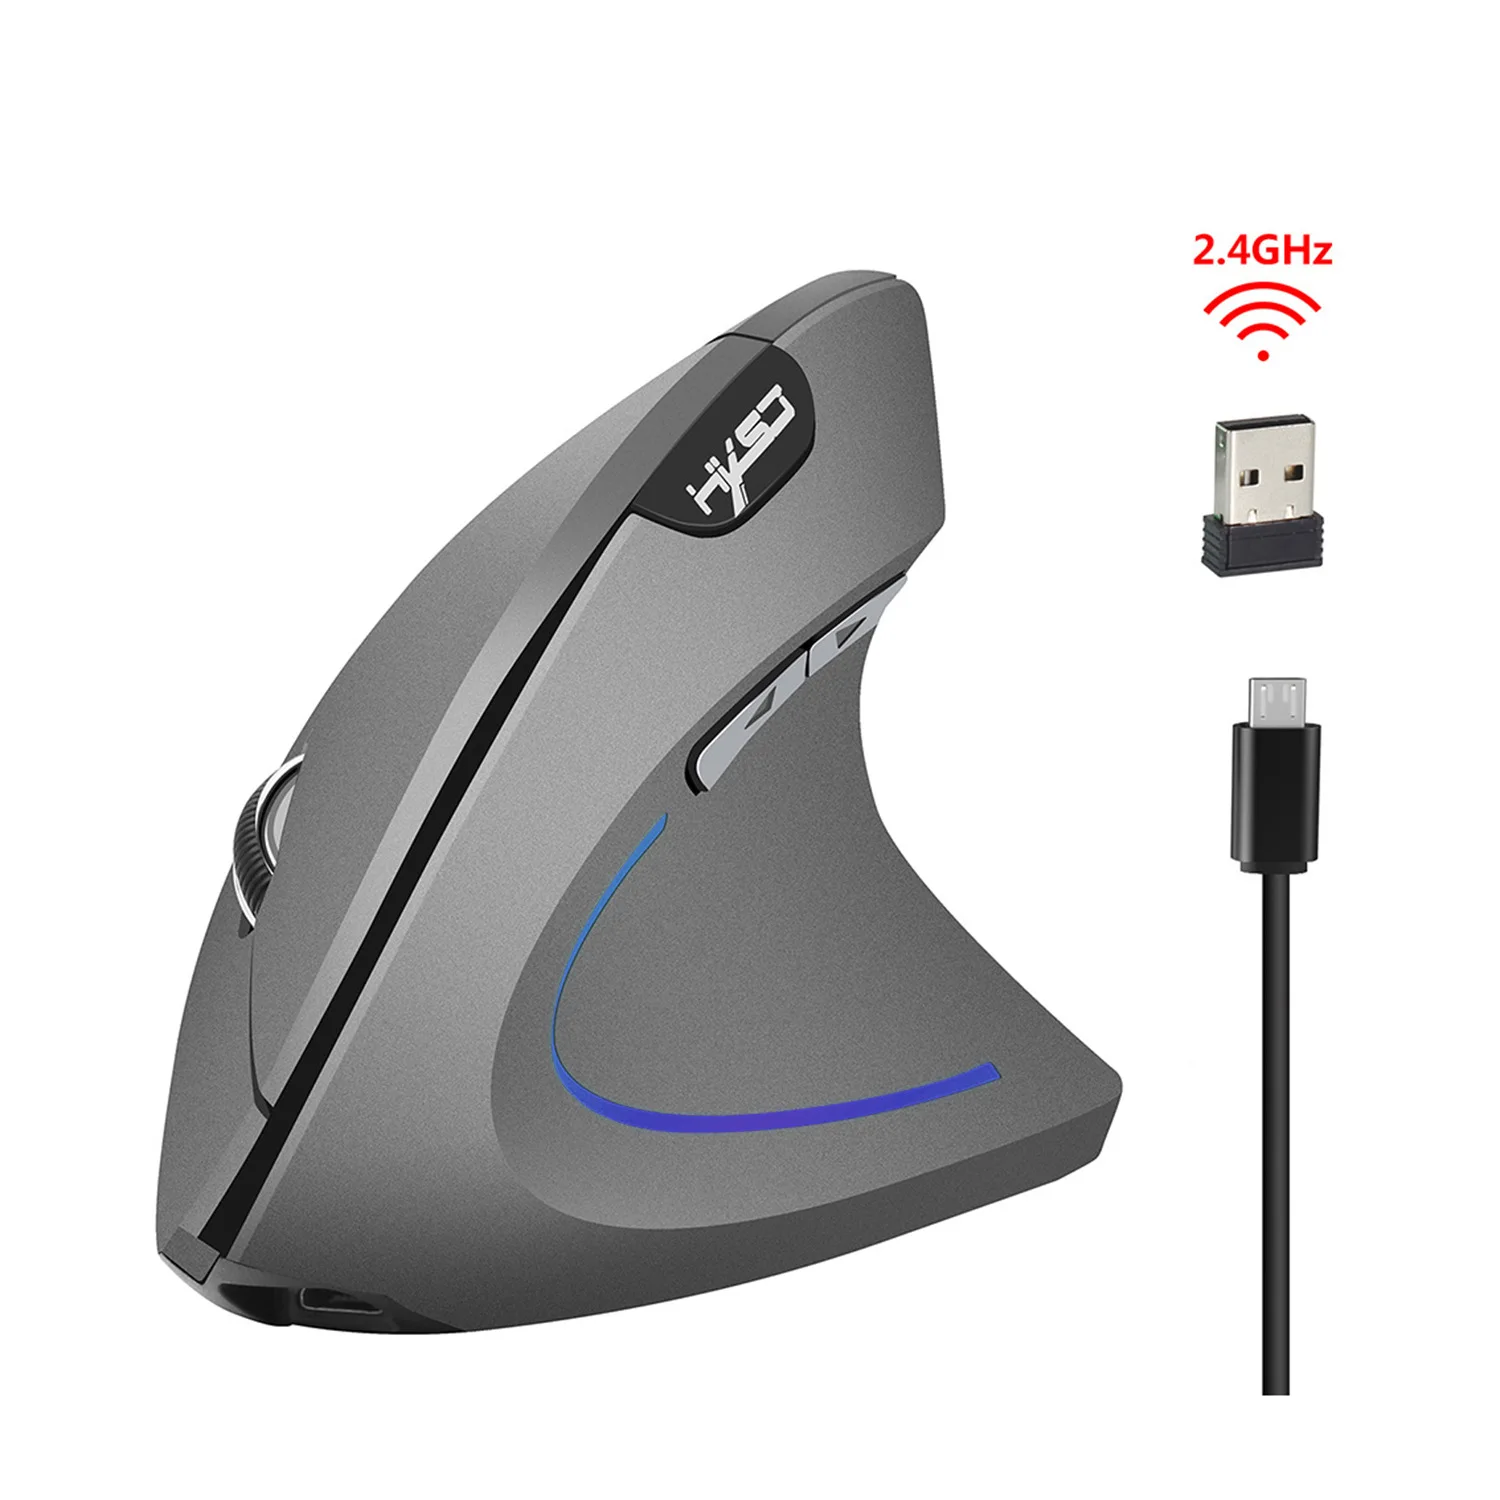 

HXSJ 2.4GHz vertical wireless mouse, ergonomic design, 2400DPI, suitable for office design